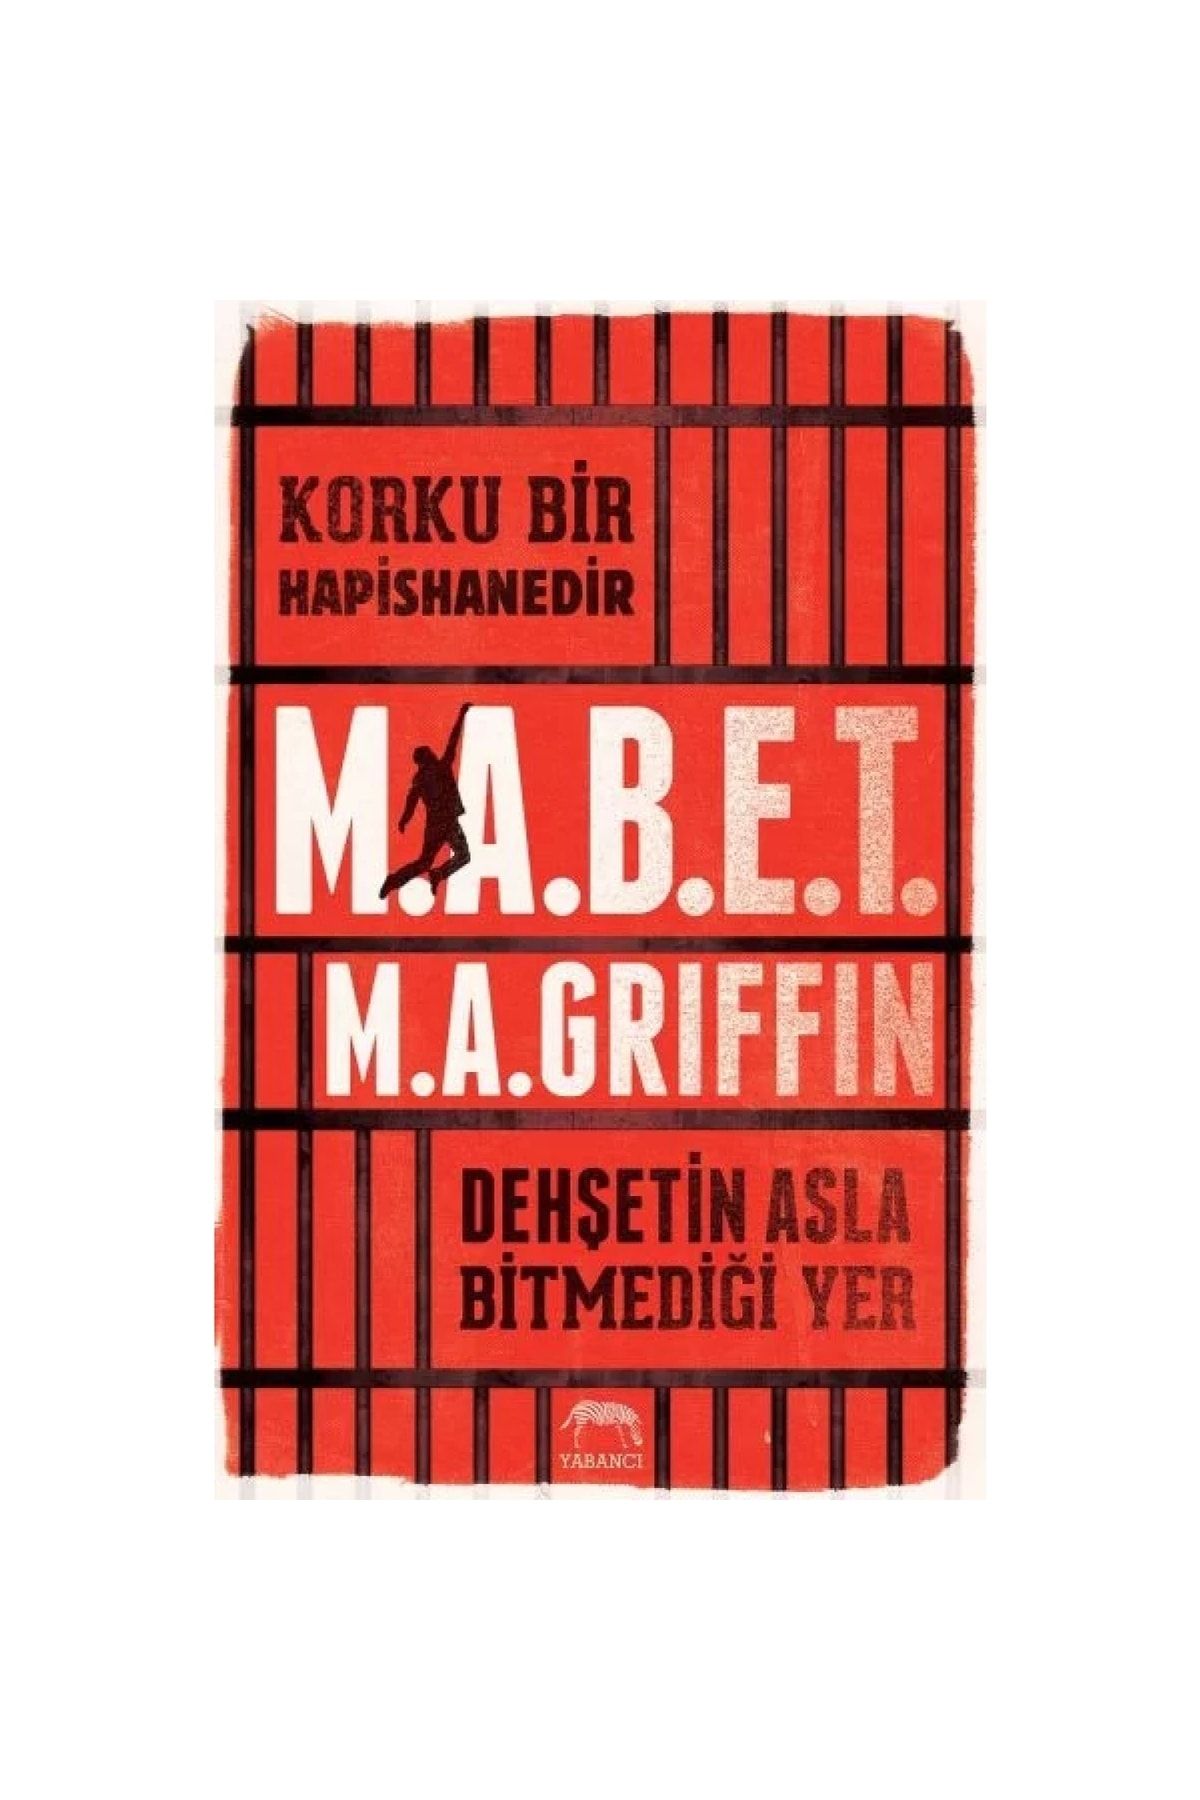 Fom Kitap Yayınları Korku Bir Hapishanedir - M.a.b.e.t M.a. Griffin Mabet